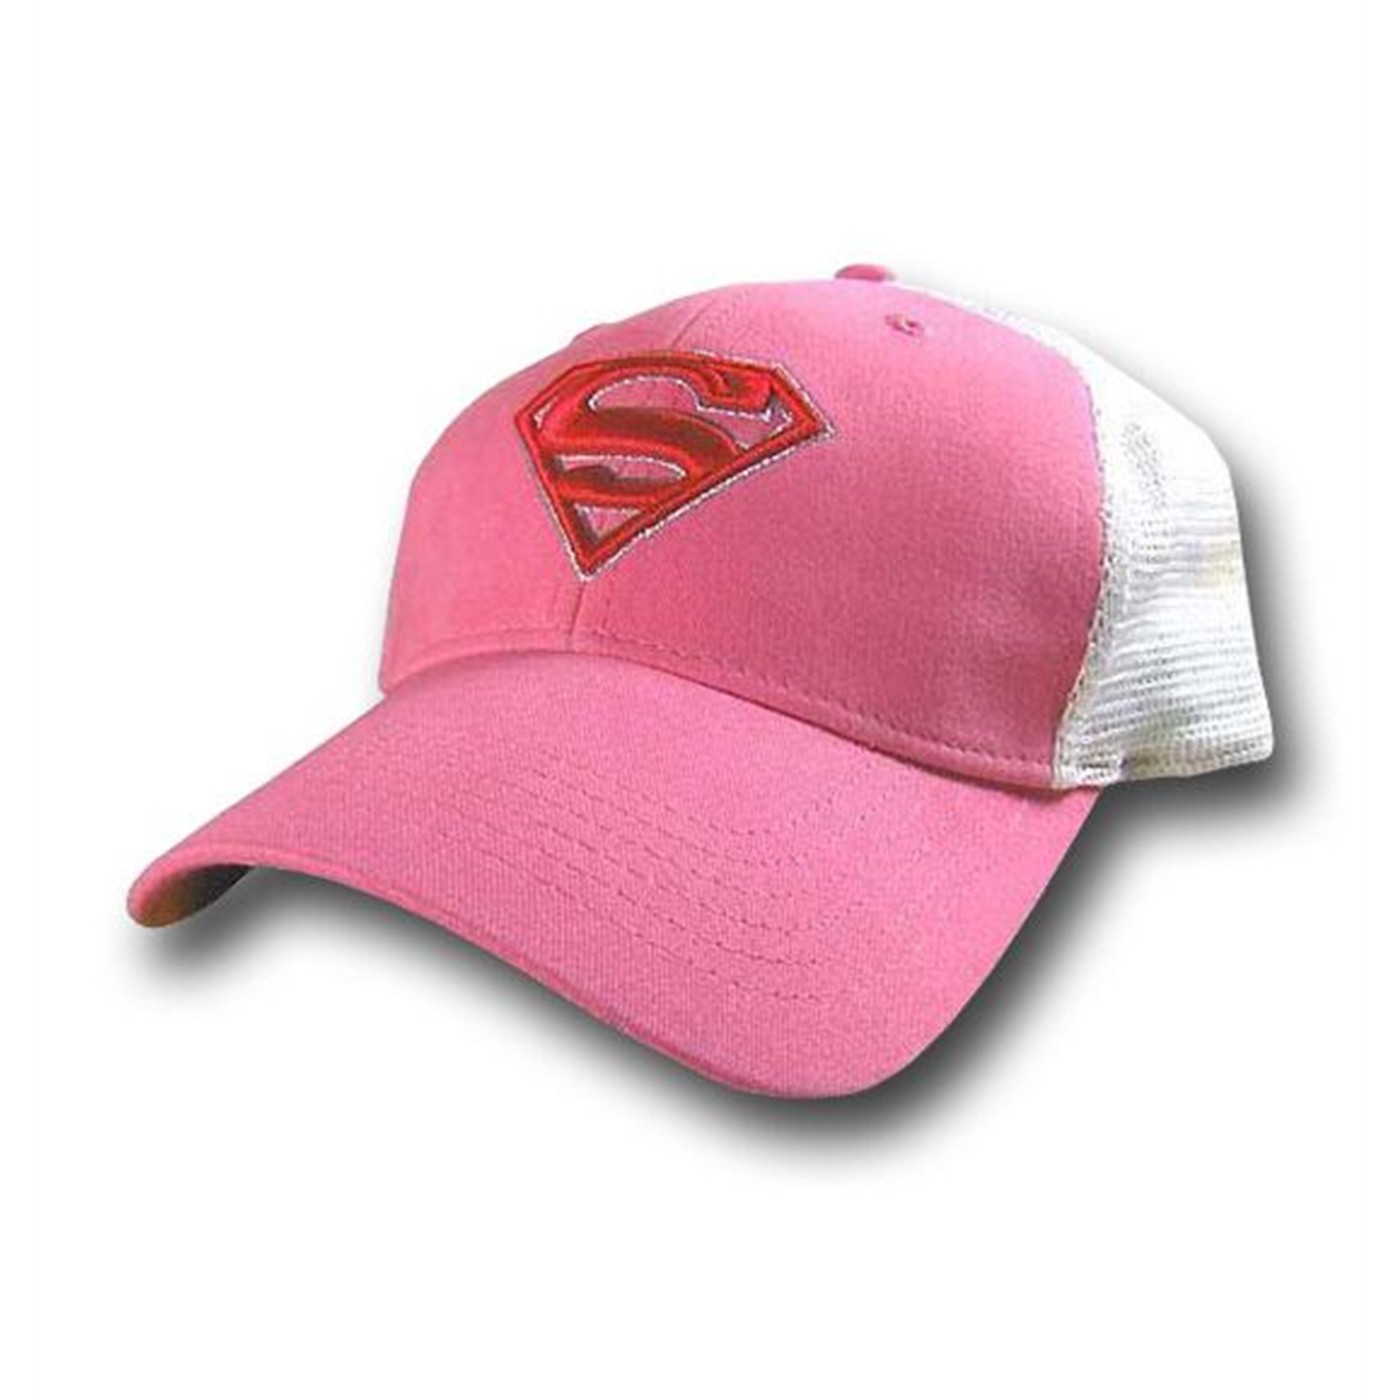 Supergirl Pink Mesh Baseball Cap/Hat